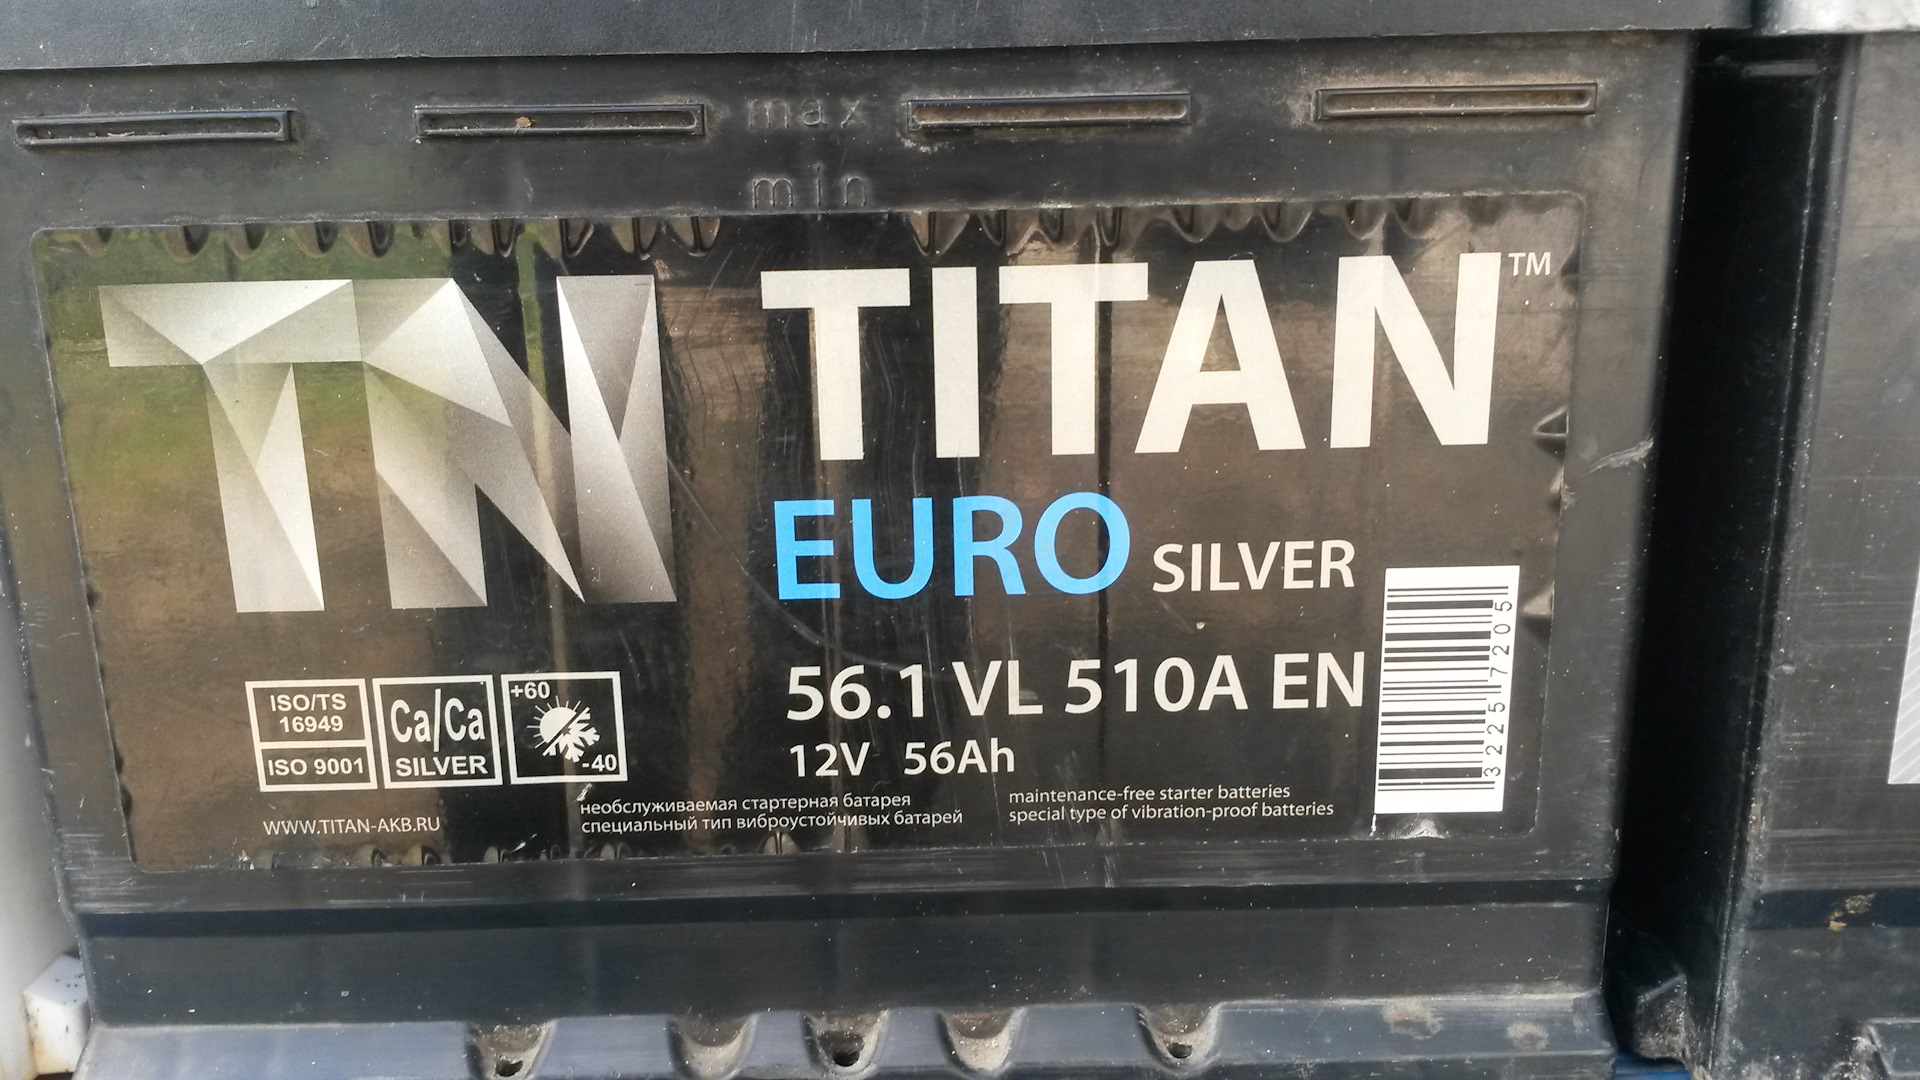 Titan Euro Silver 61.1. Аккумулятор Титан евро Сильвер 61.1. АКБ Титан 72. Titan аккумулятор плакаты. Аккумулятор титан 60 отзывы